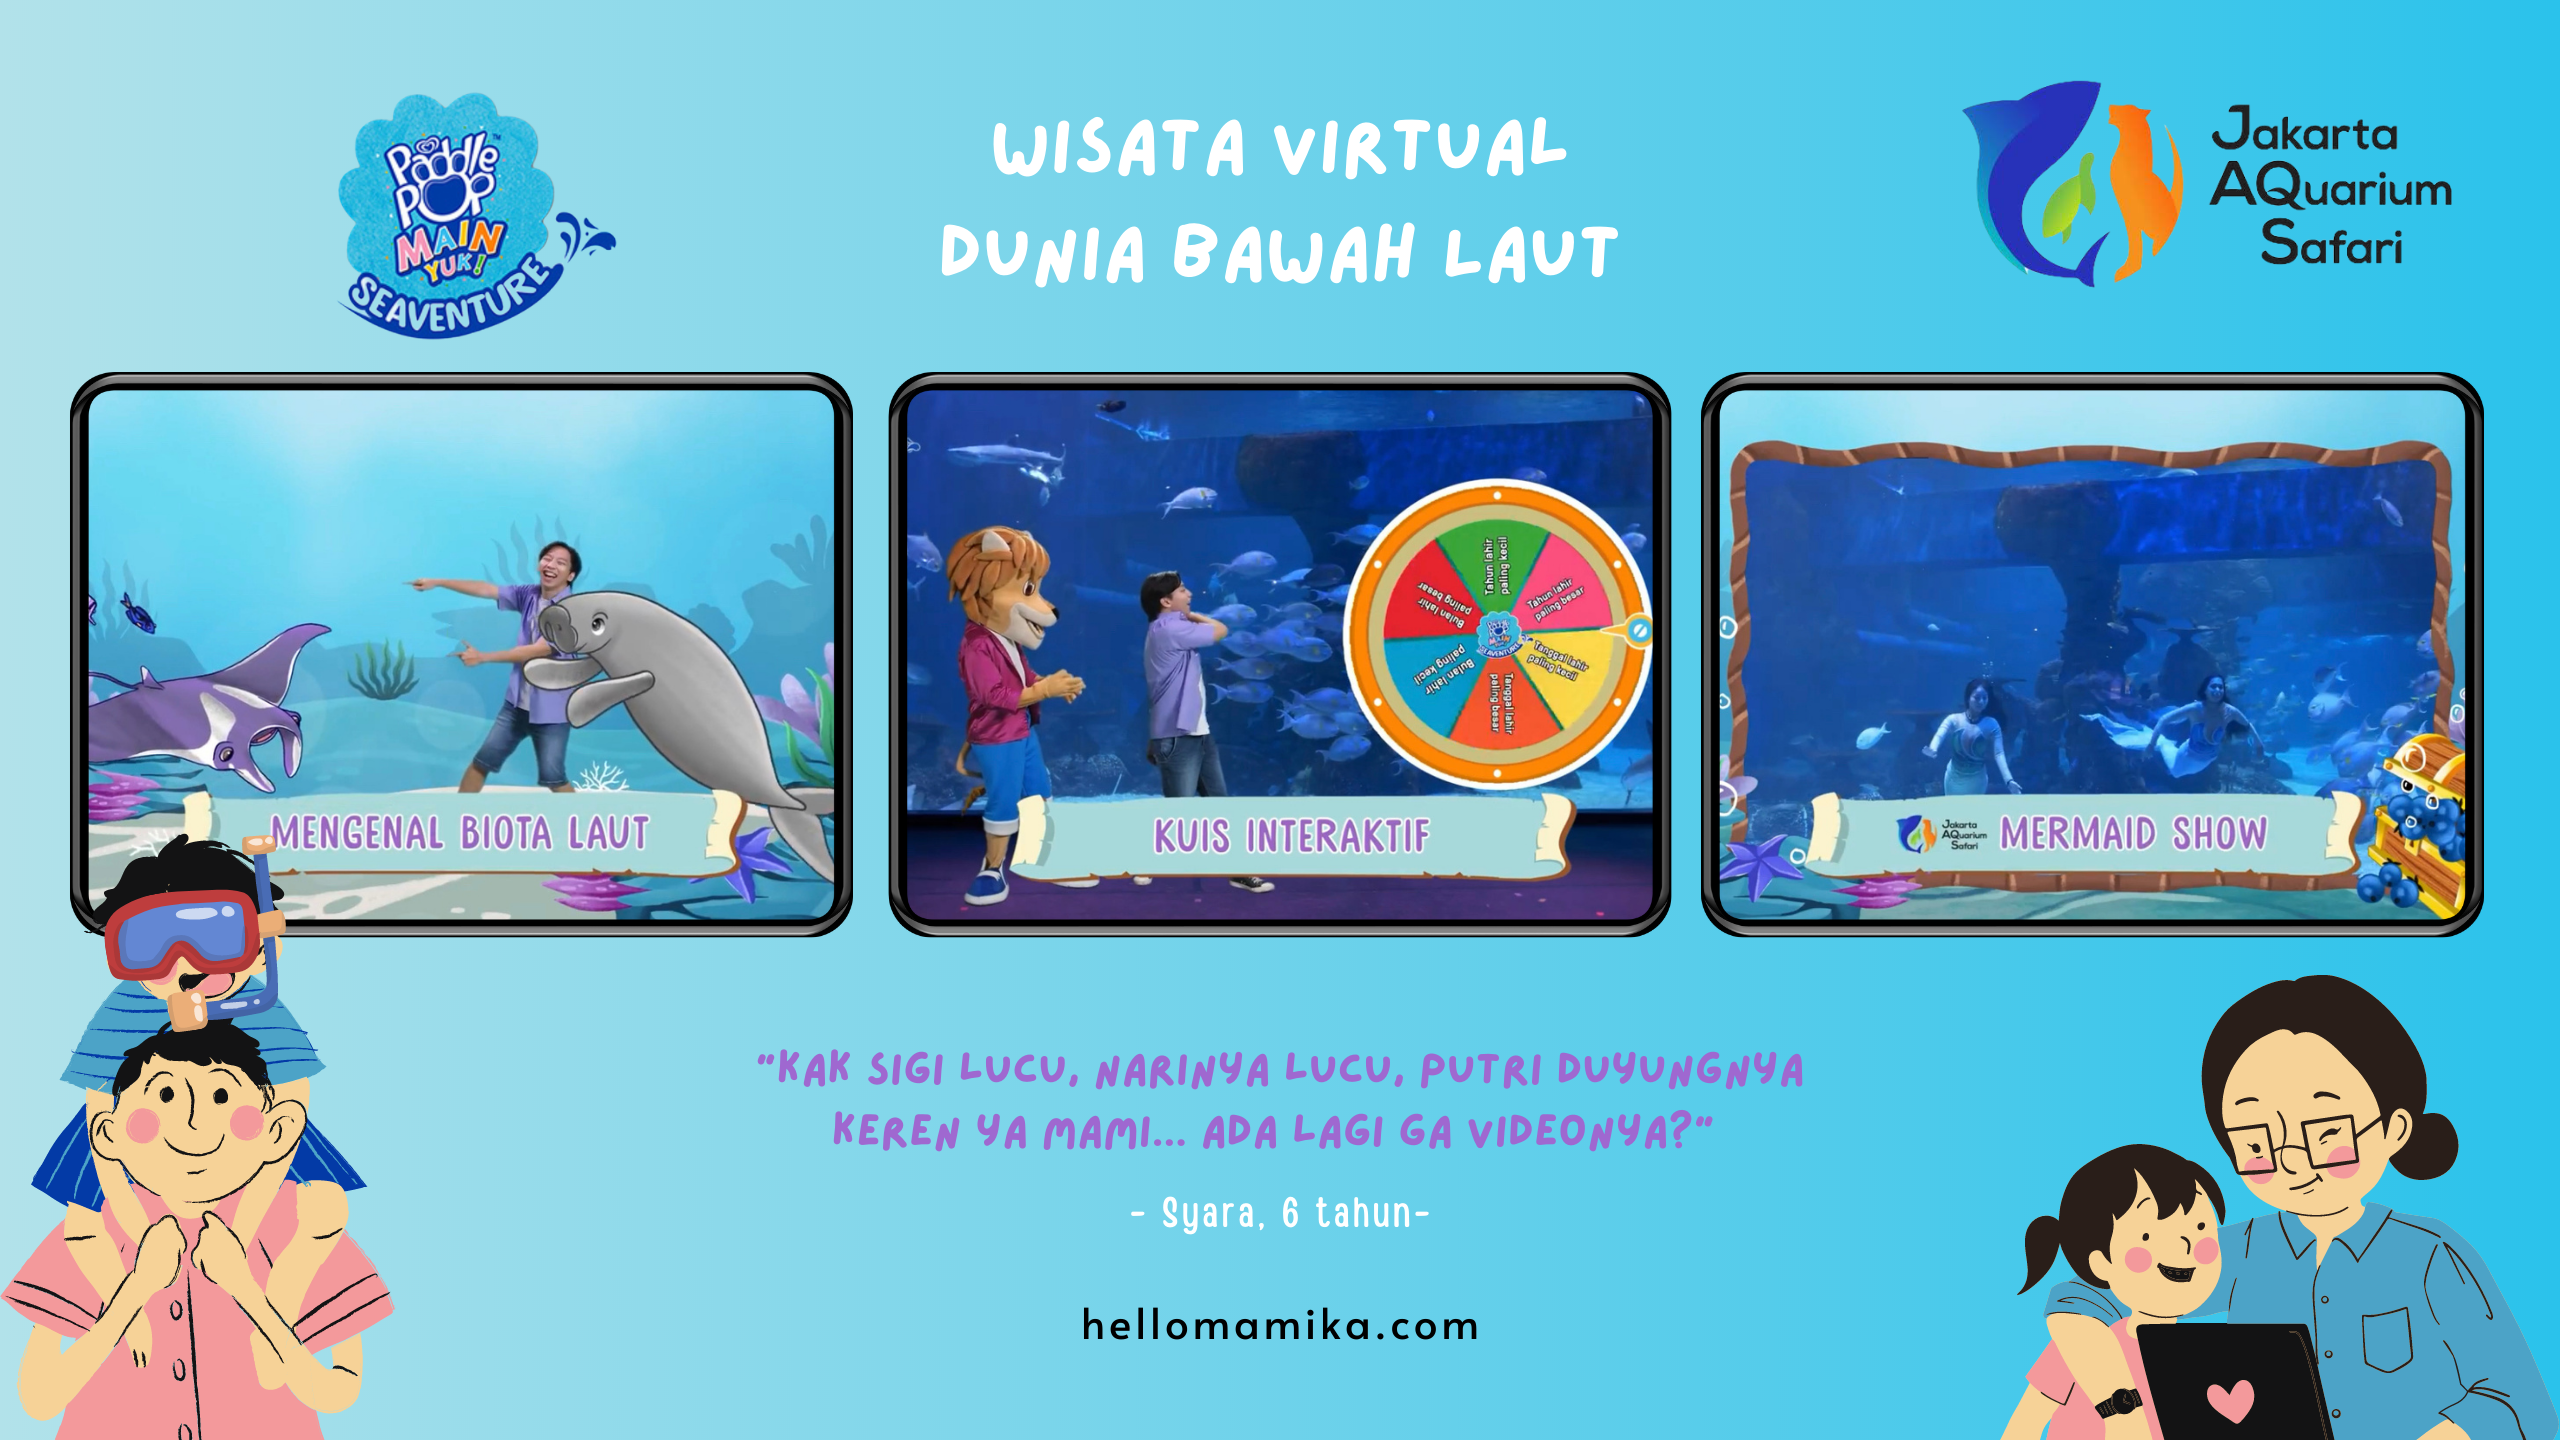 Paddlepop seaventure wisata virtual dunia bawah laut jakarta aquarium